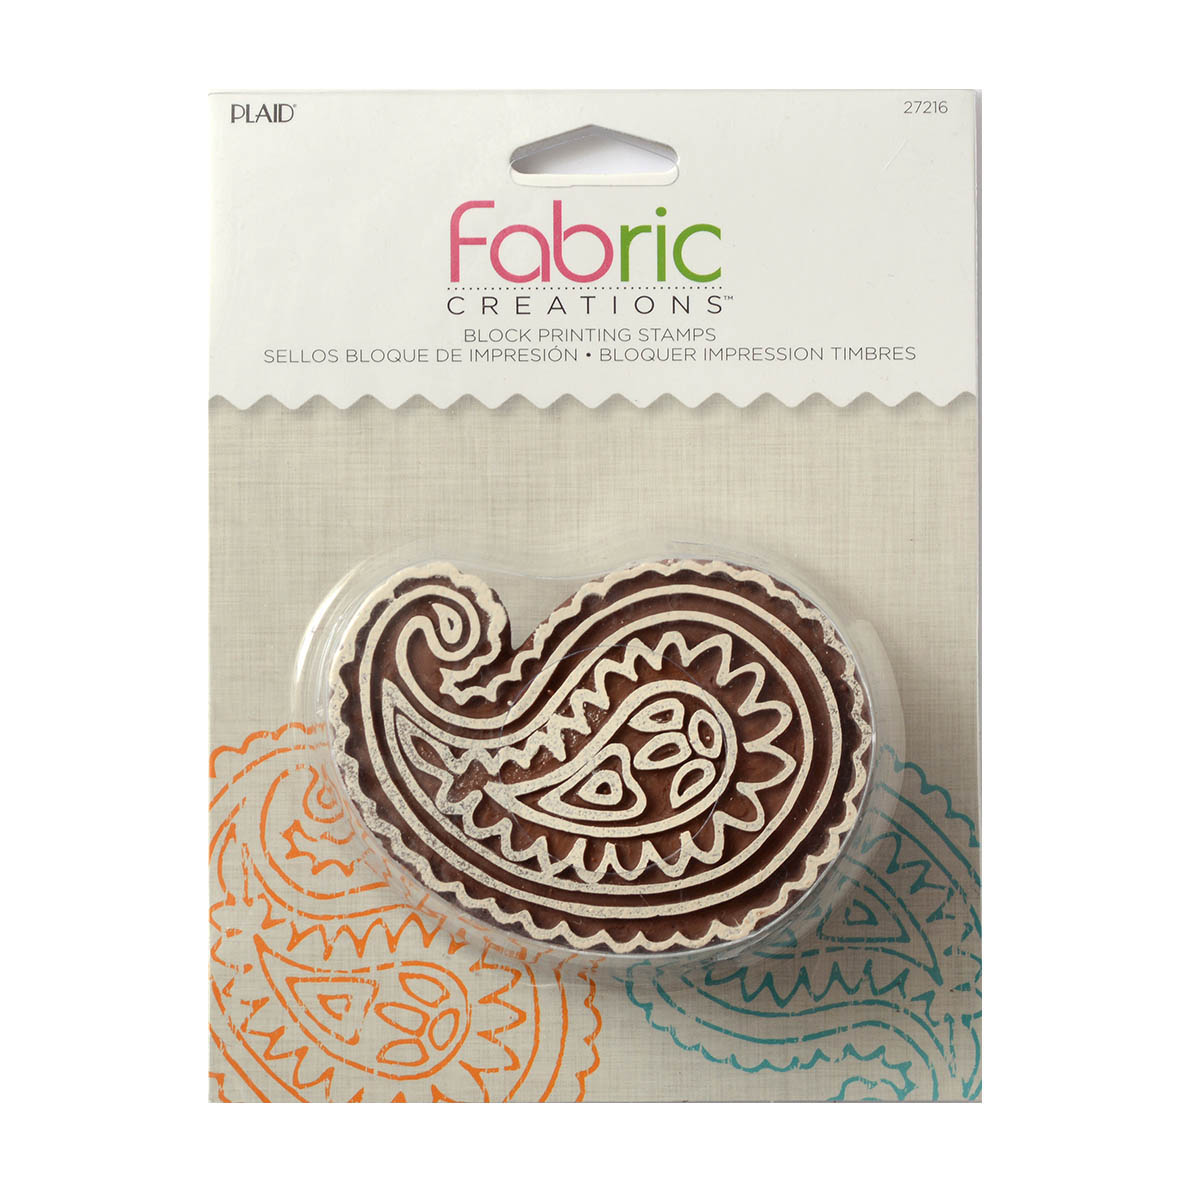 Fabric Creations™ Block Printing Stamps - Medium - Paisley